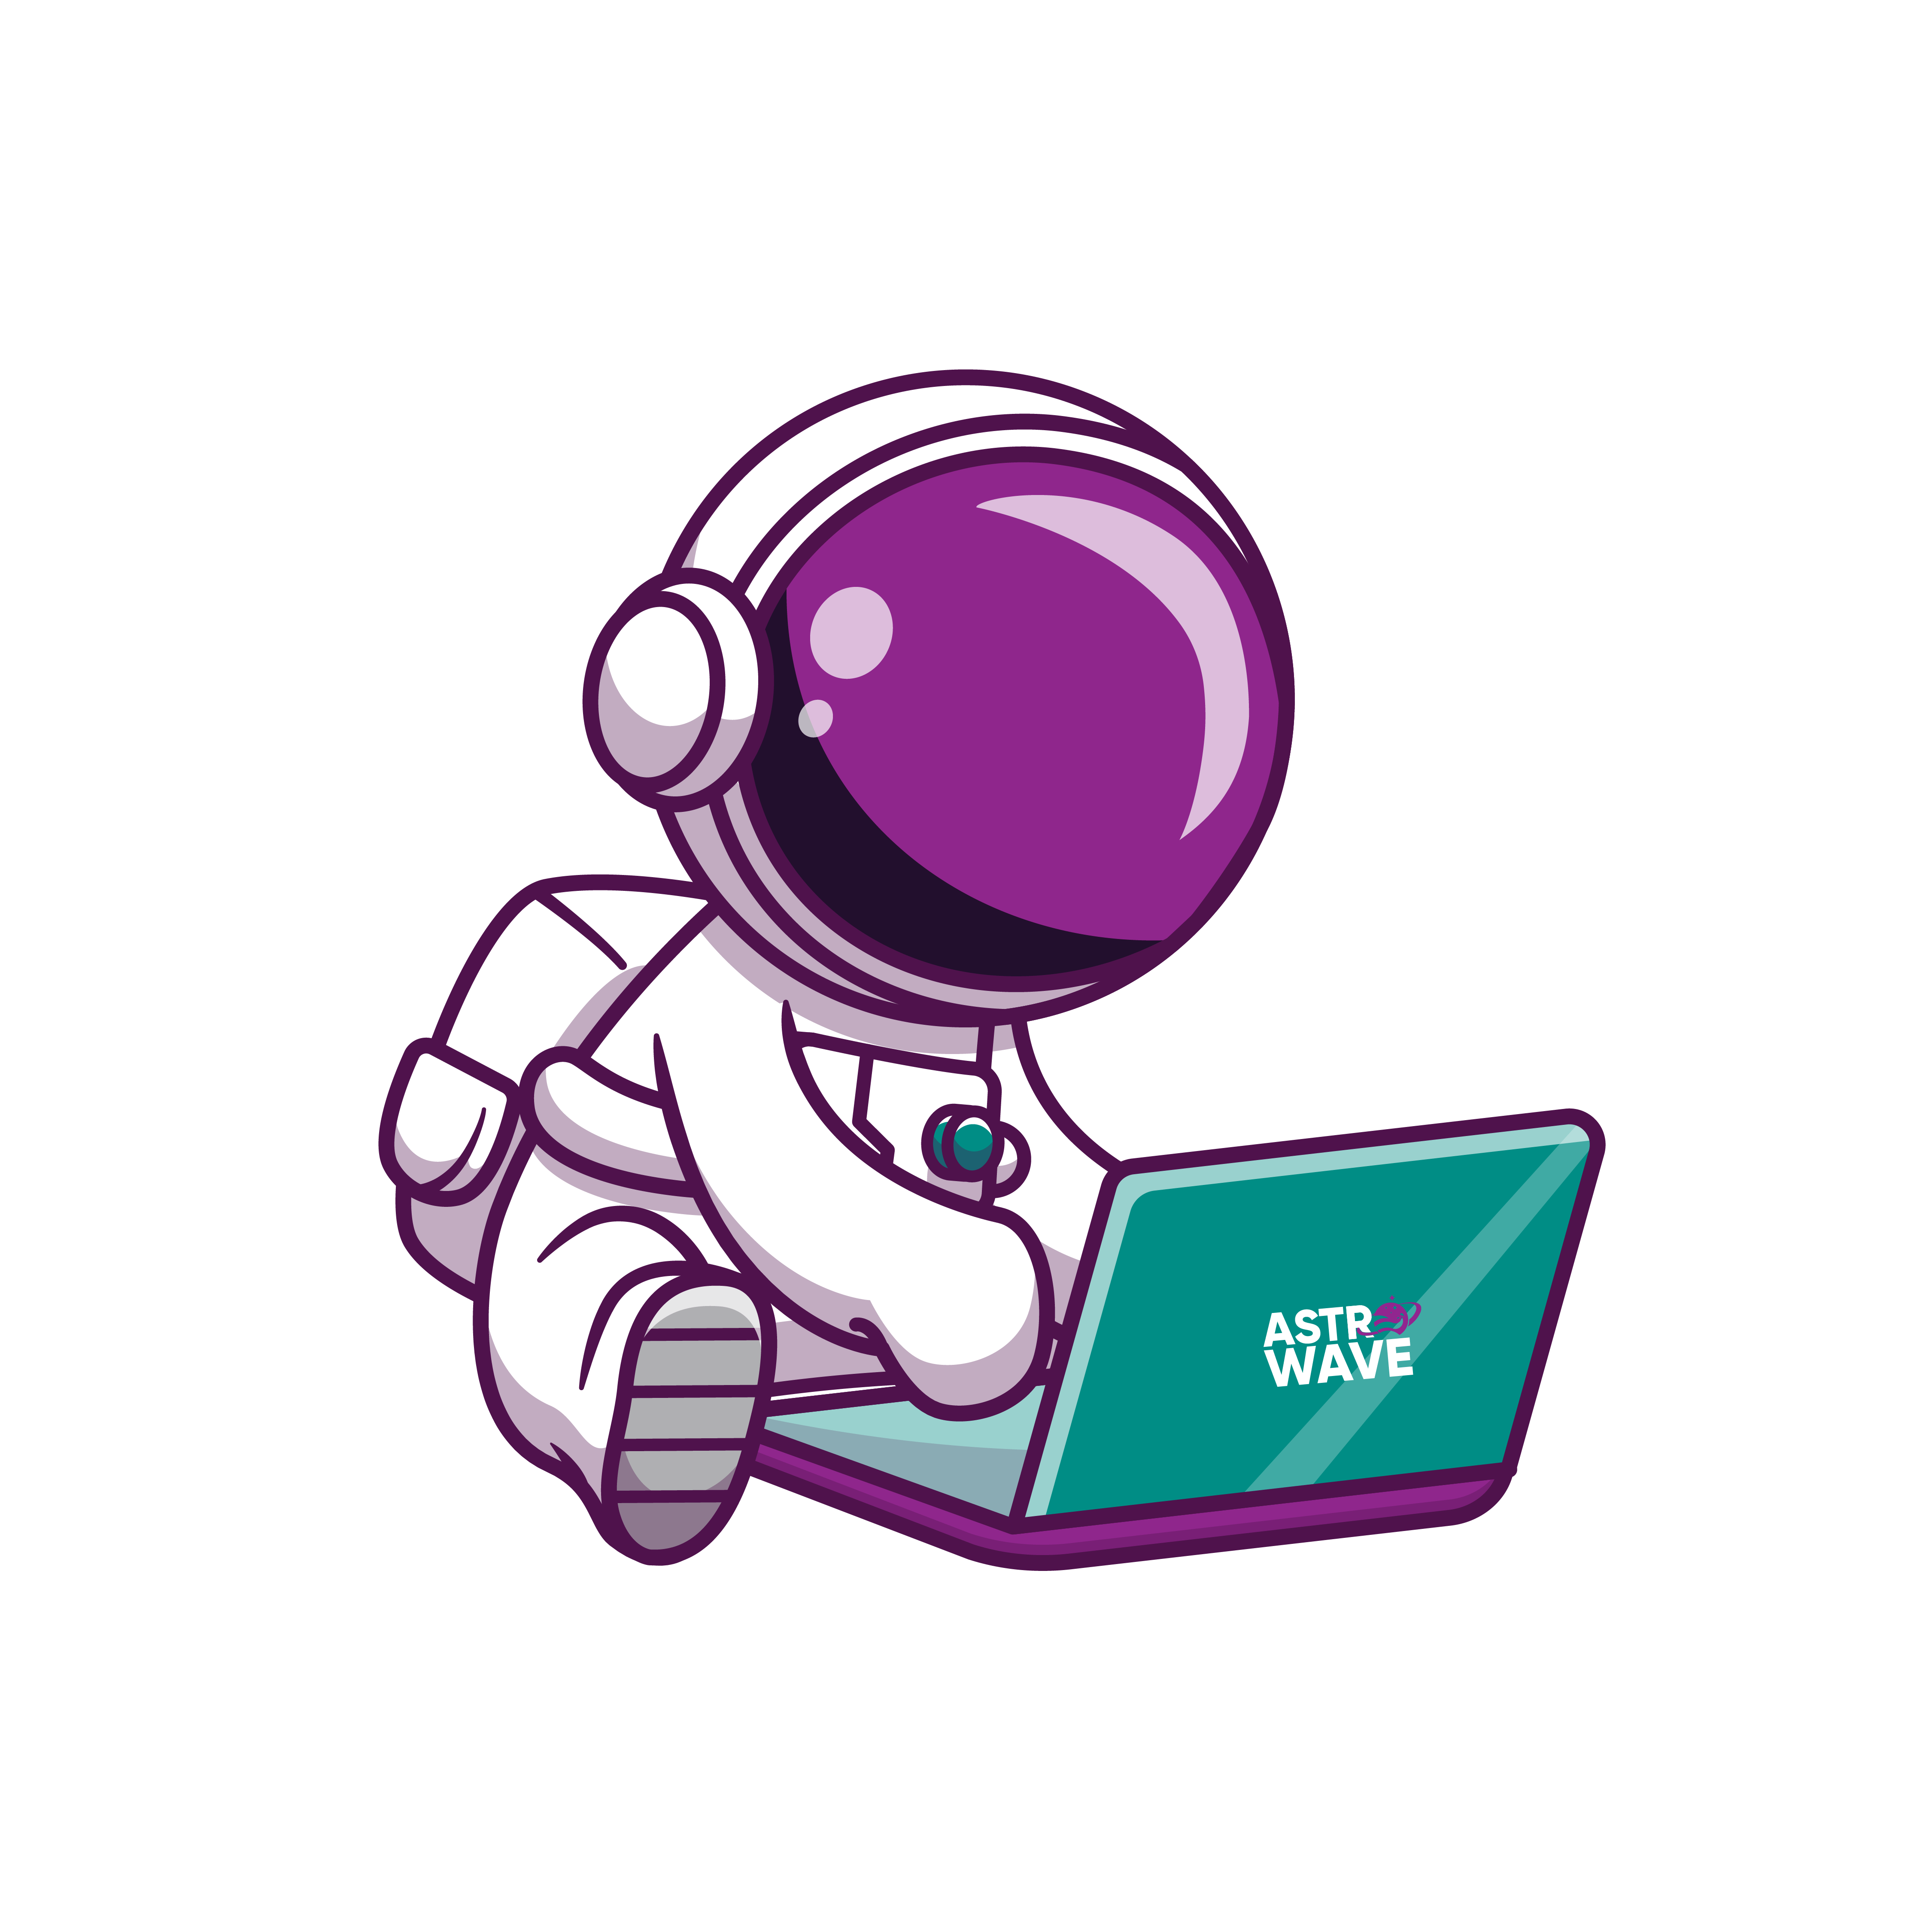 Astrowave astronaut working on laptop